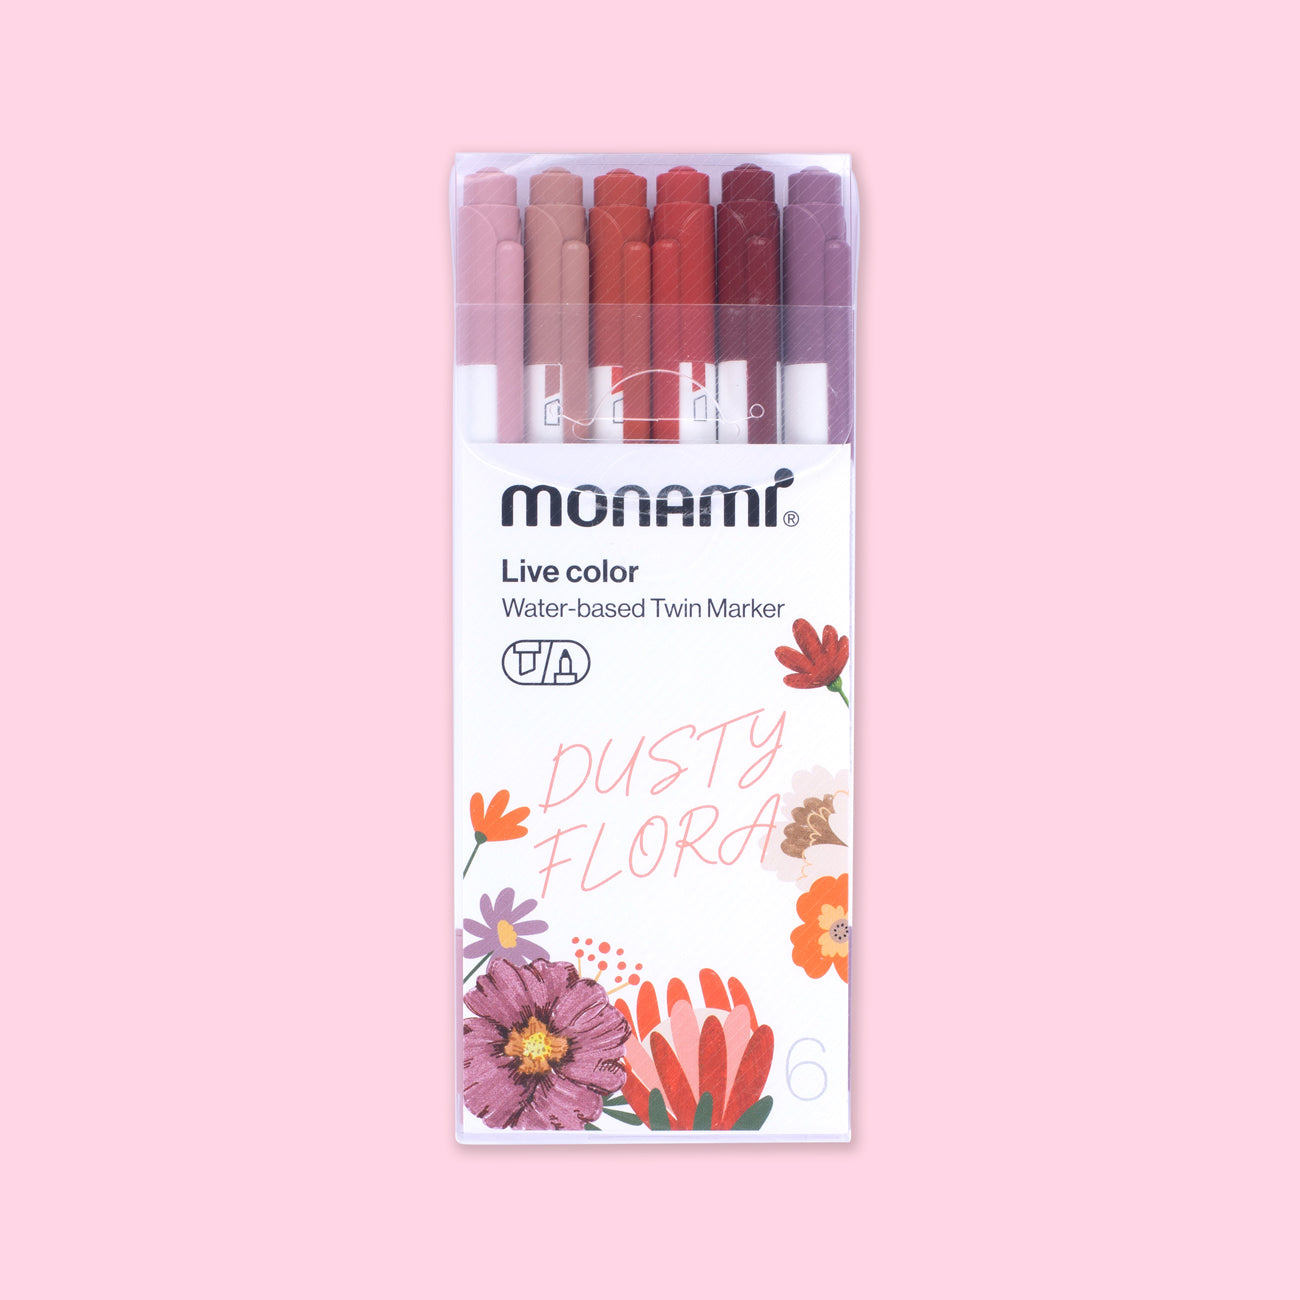 Monami Dual Tip Marker- Gray Mood - Set of 6